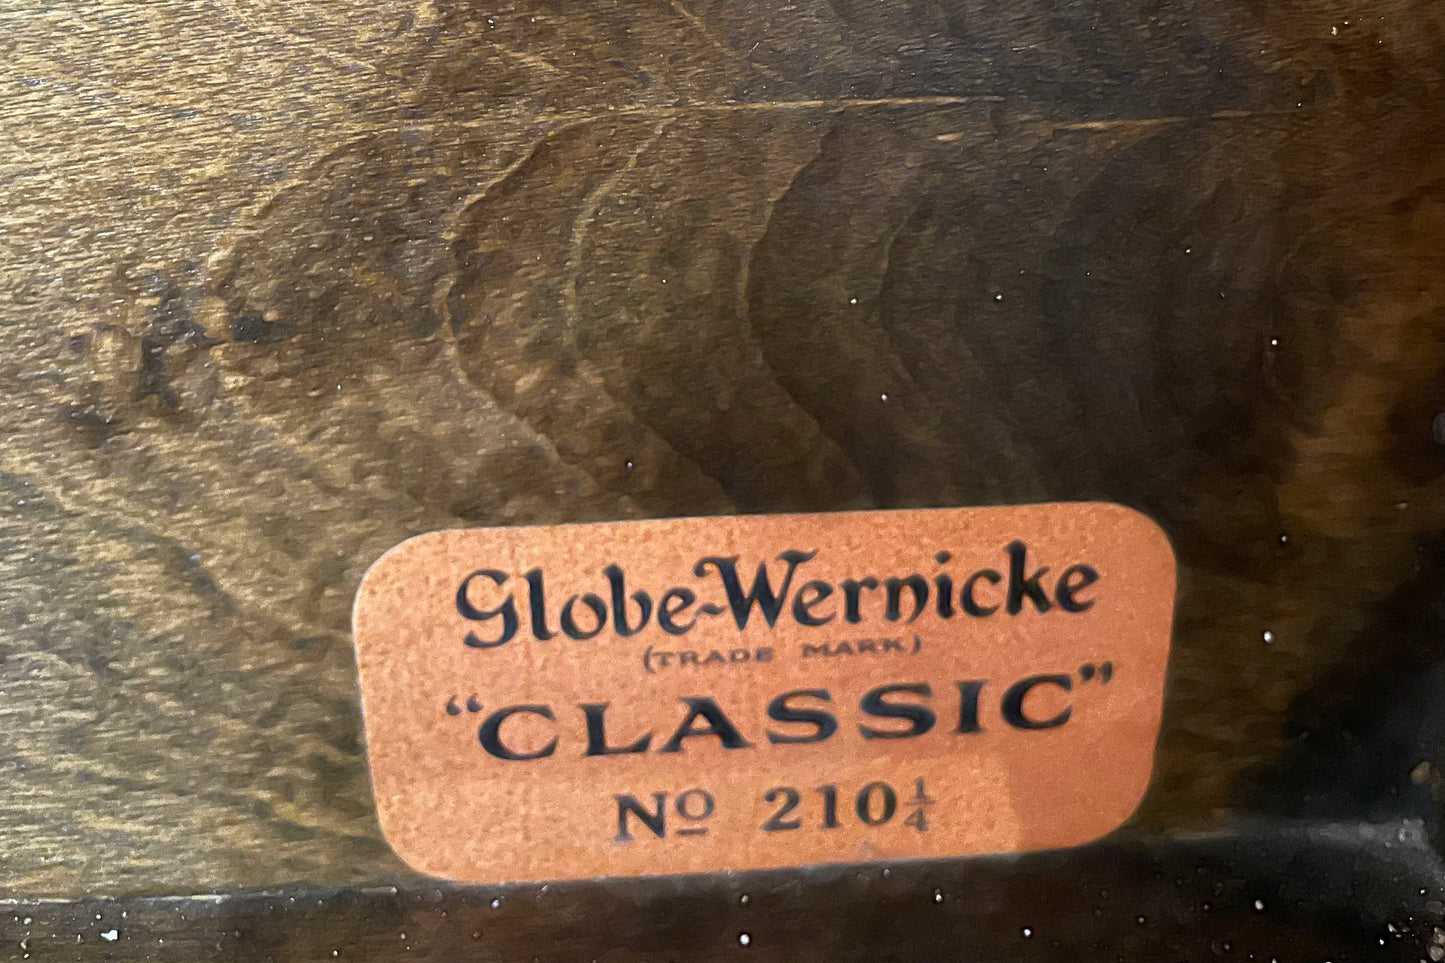 Globe-Wernicke "classic" no 210 1/4 Oak and glass bookcase